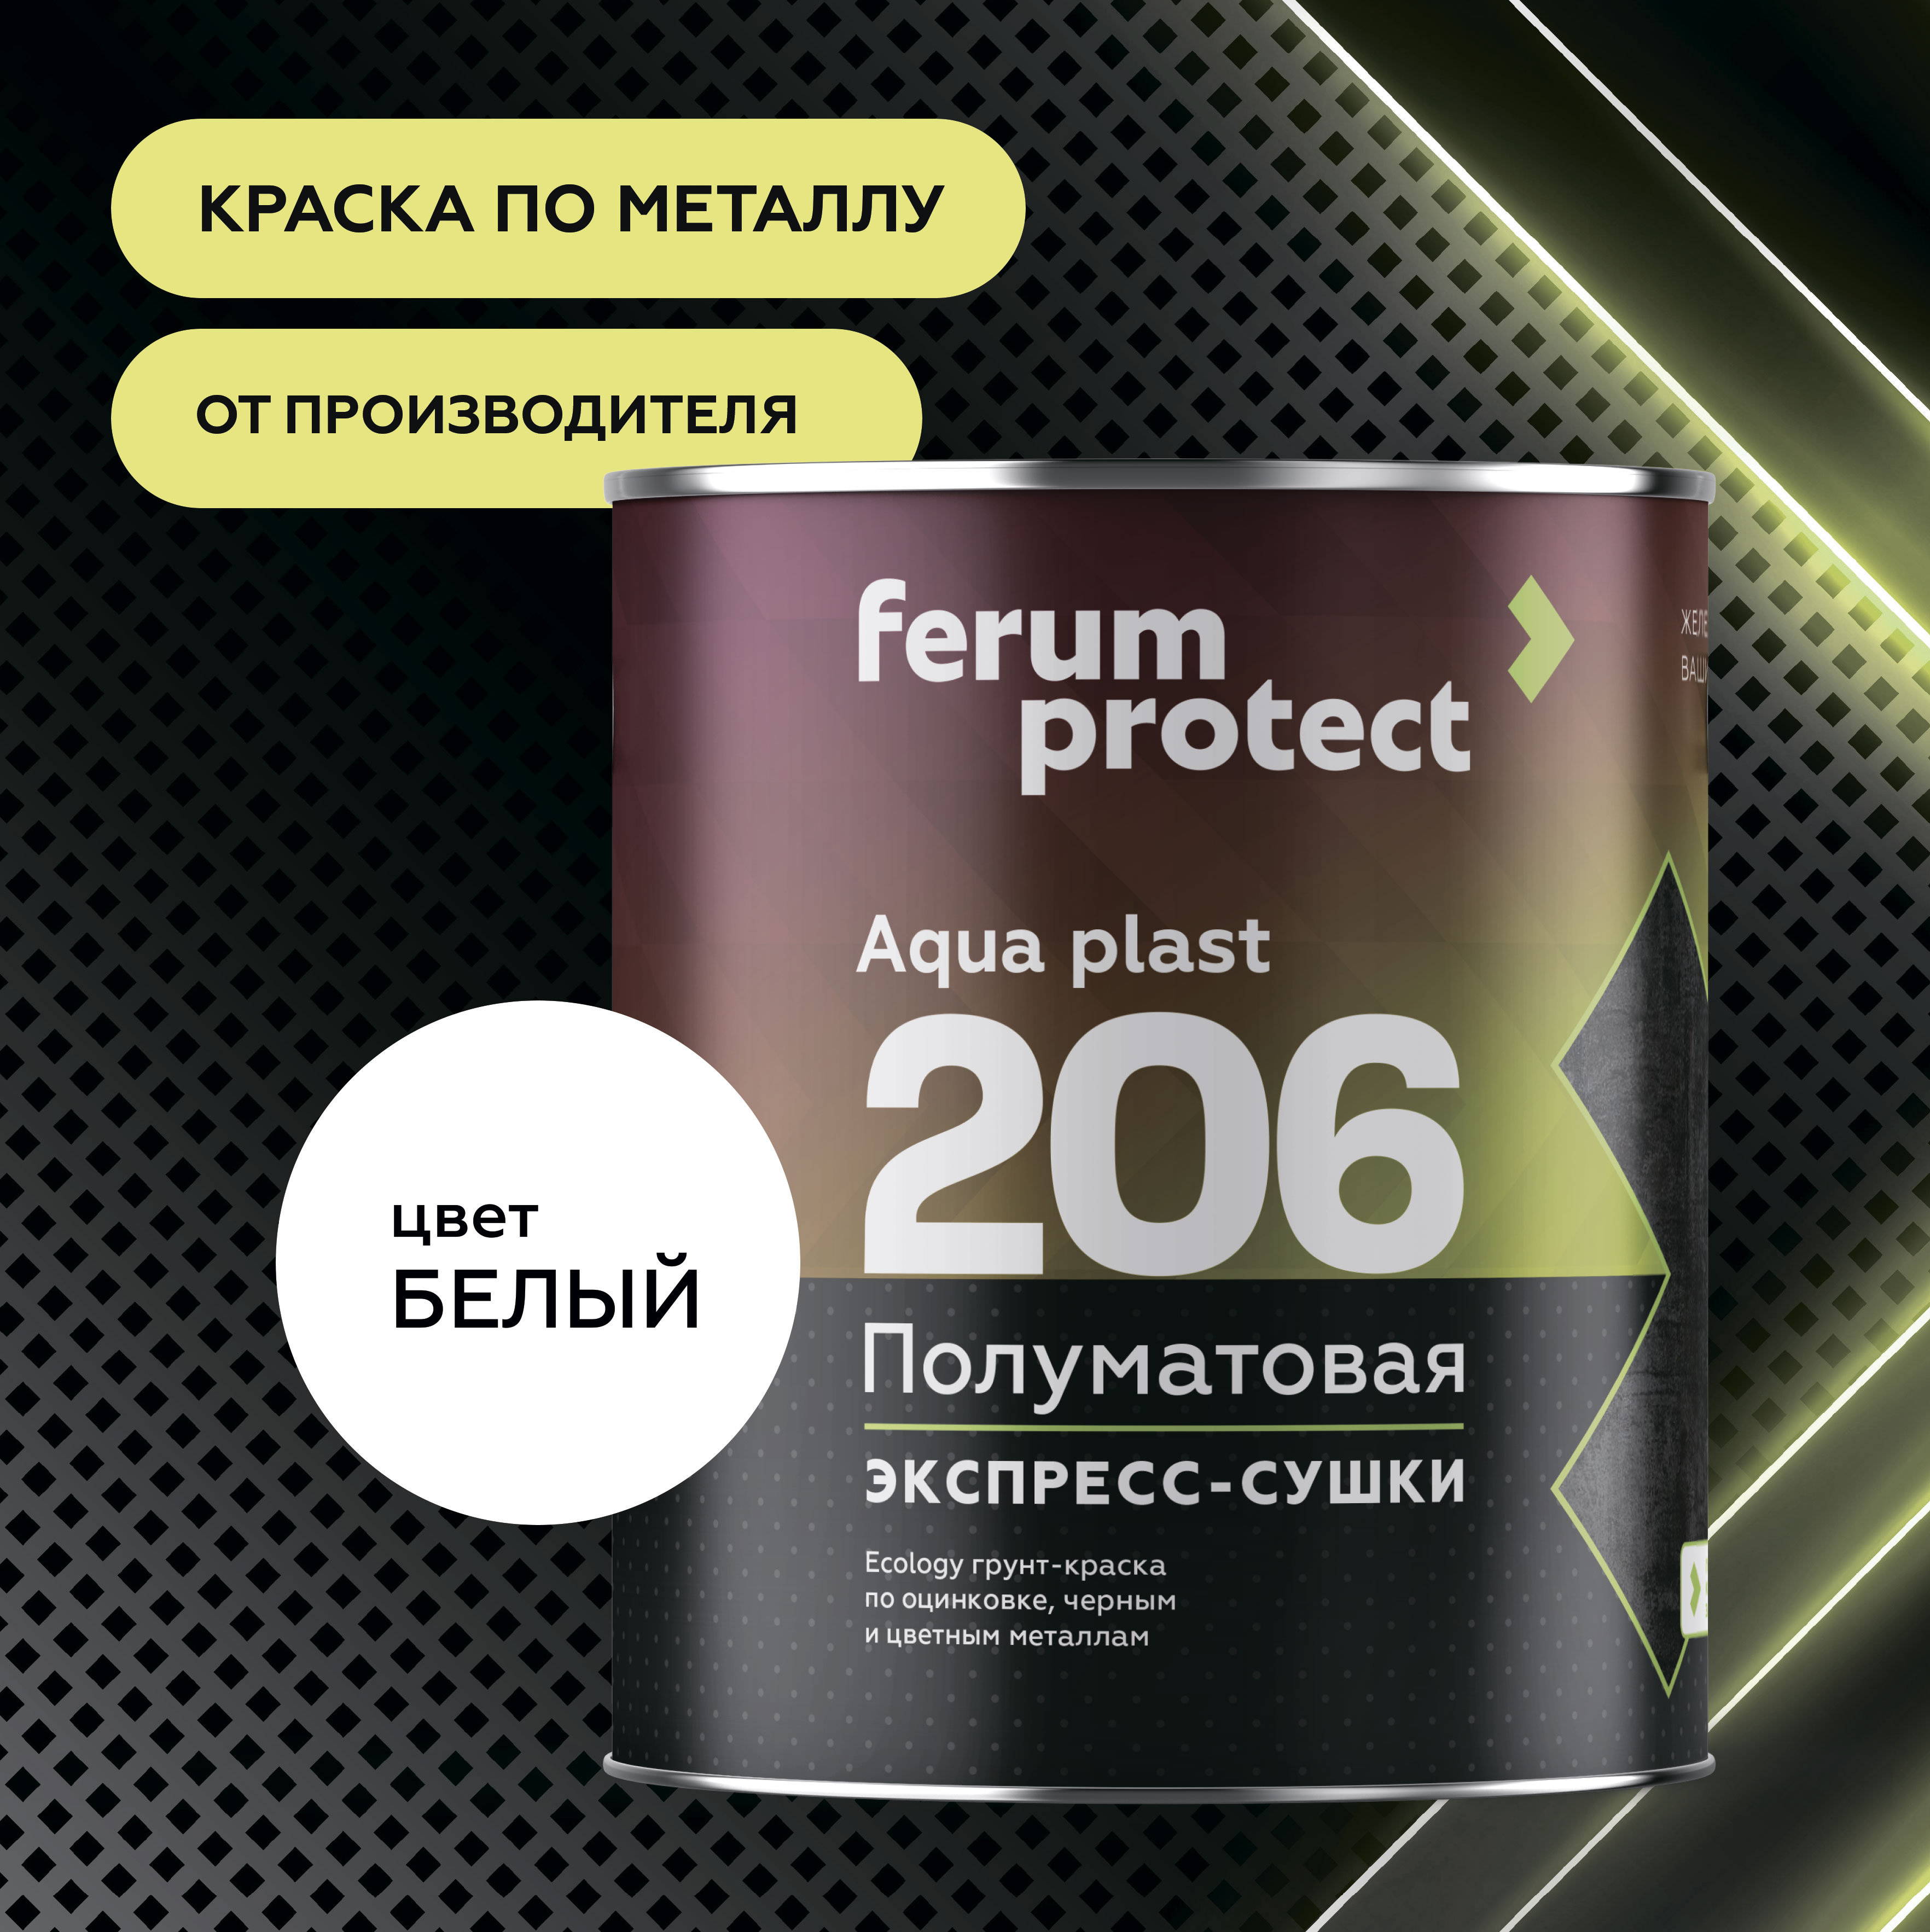 FERUMPROTECT-206 краска-грунт по оцинковке/металлу